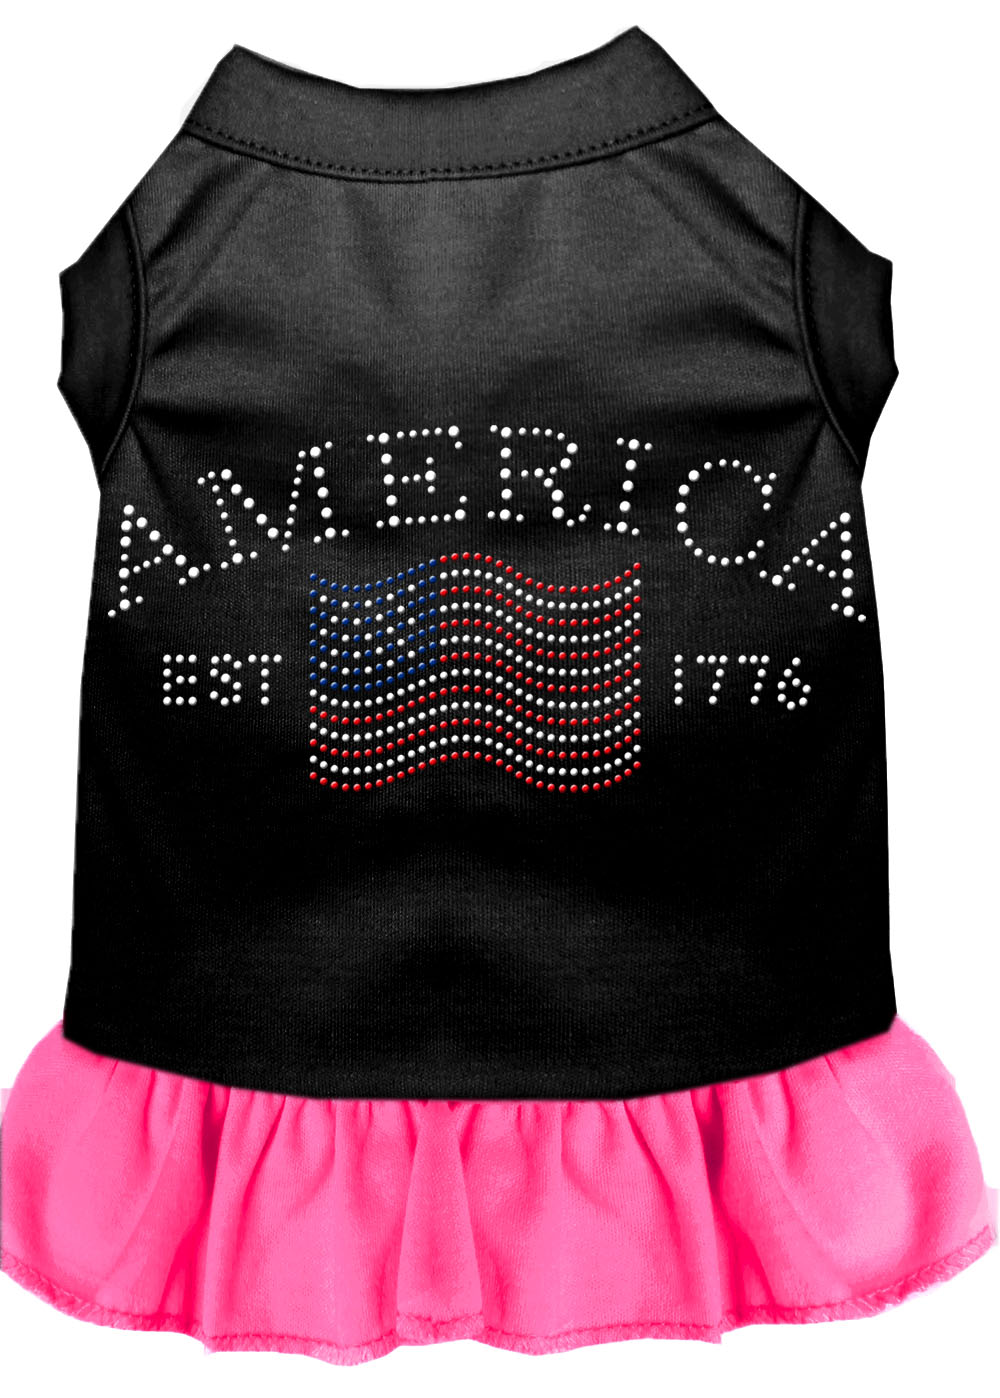 Classic America Rhinestone Dress Black with Bright Pink XXXL